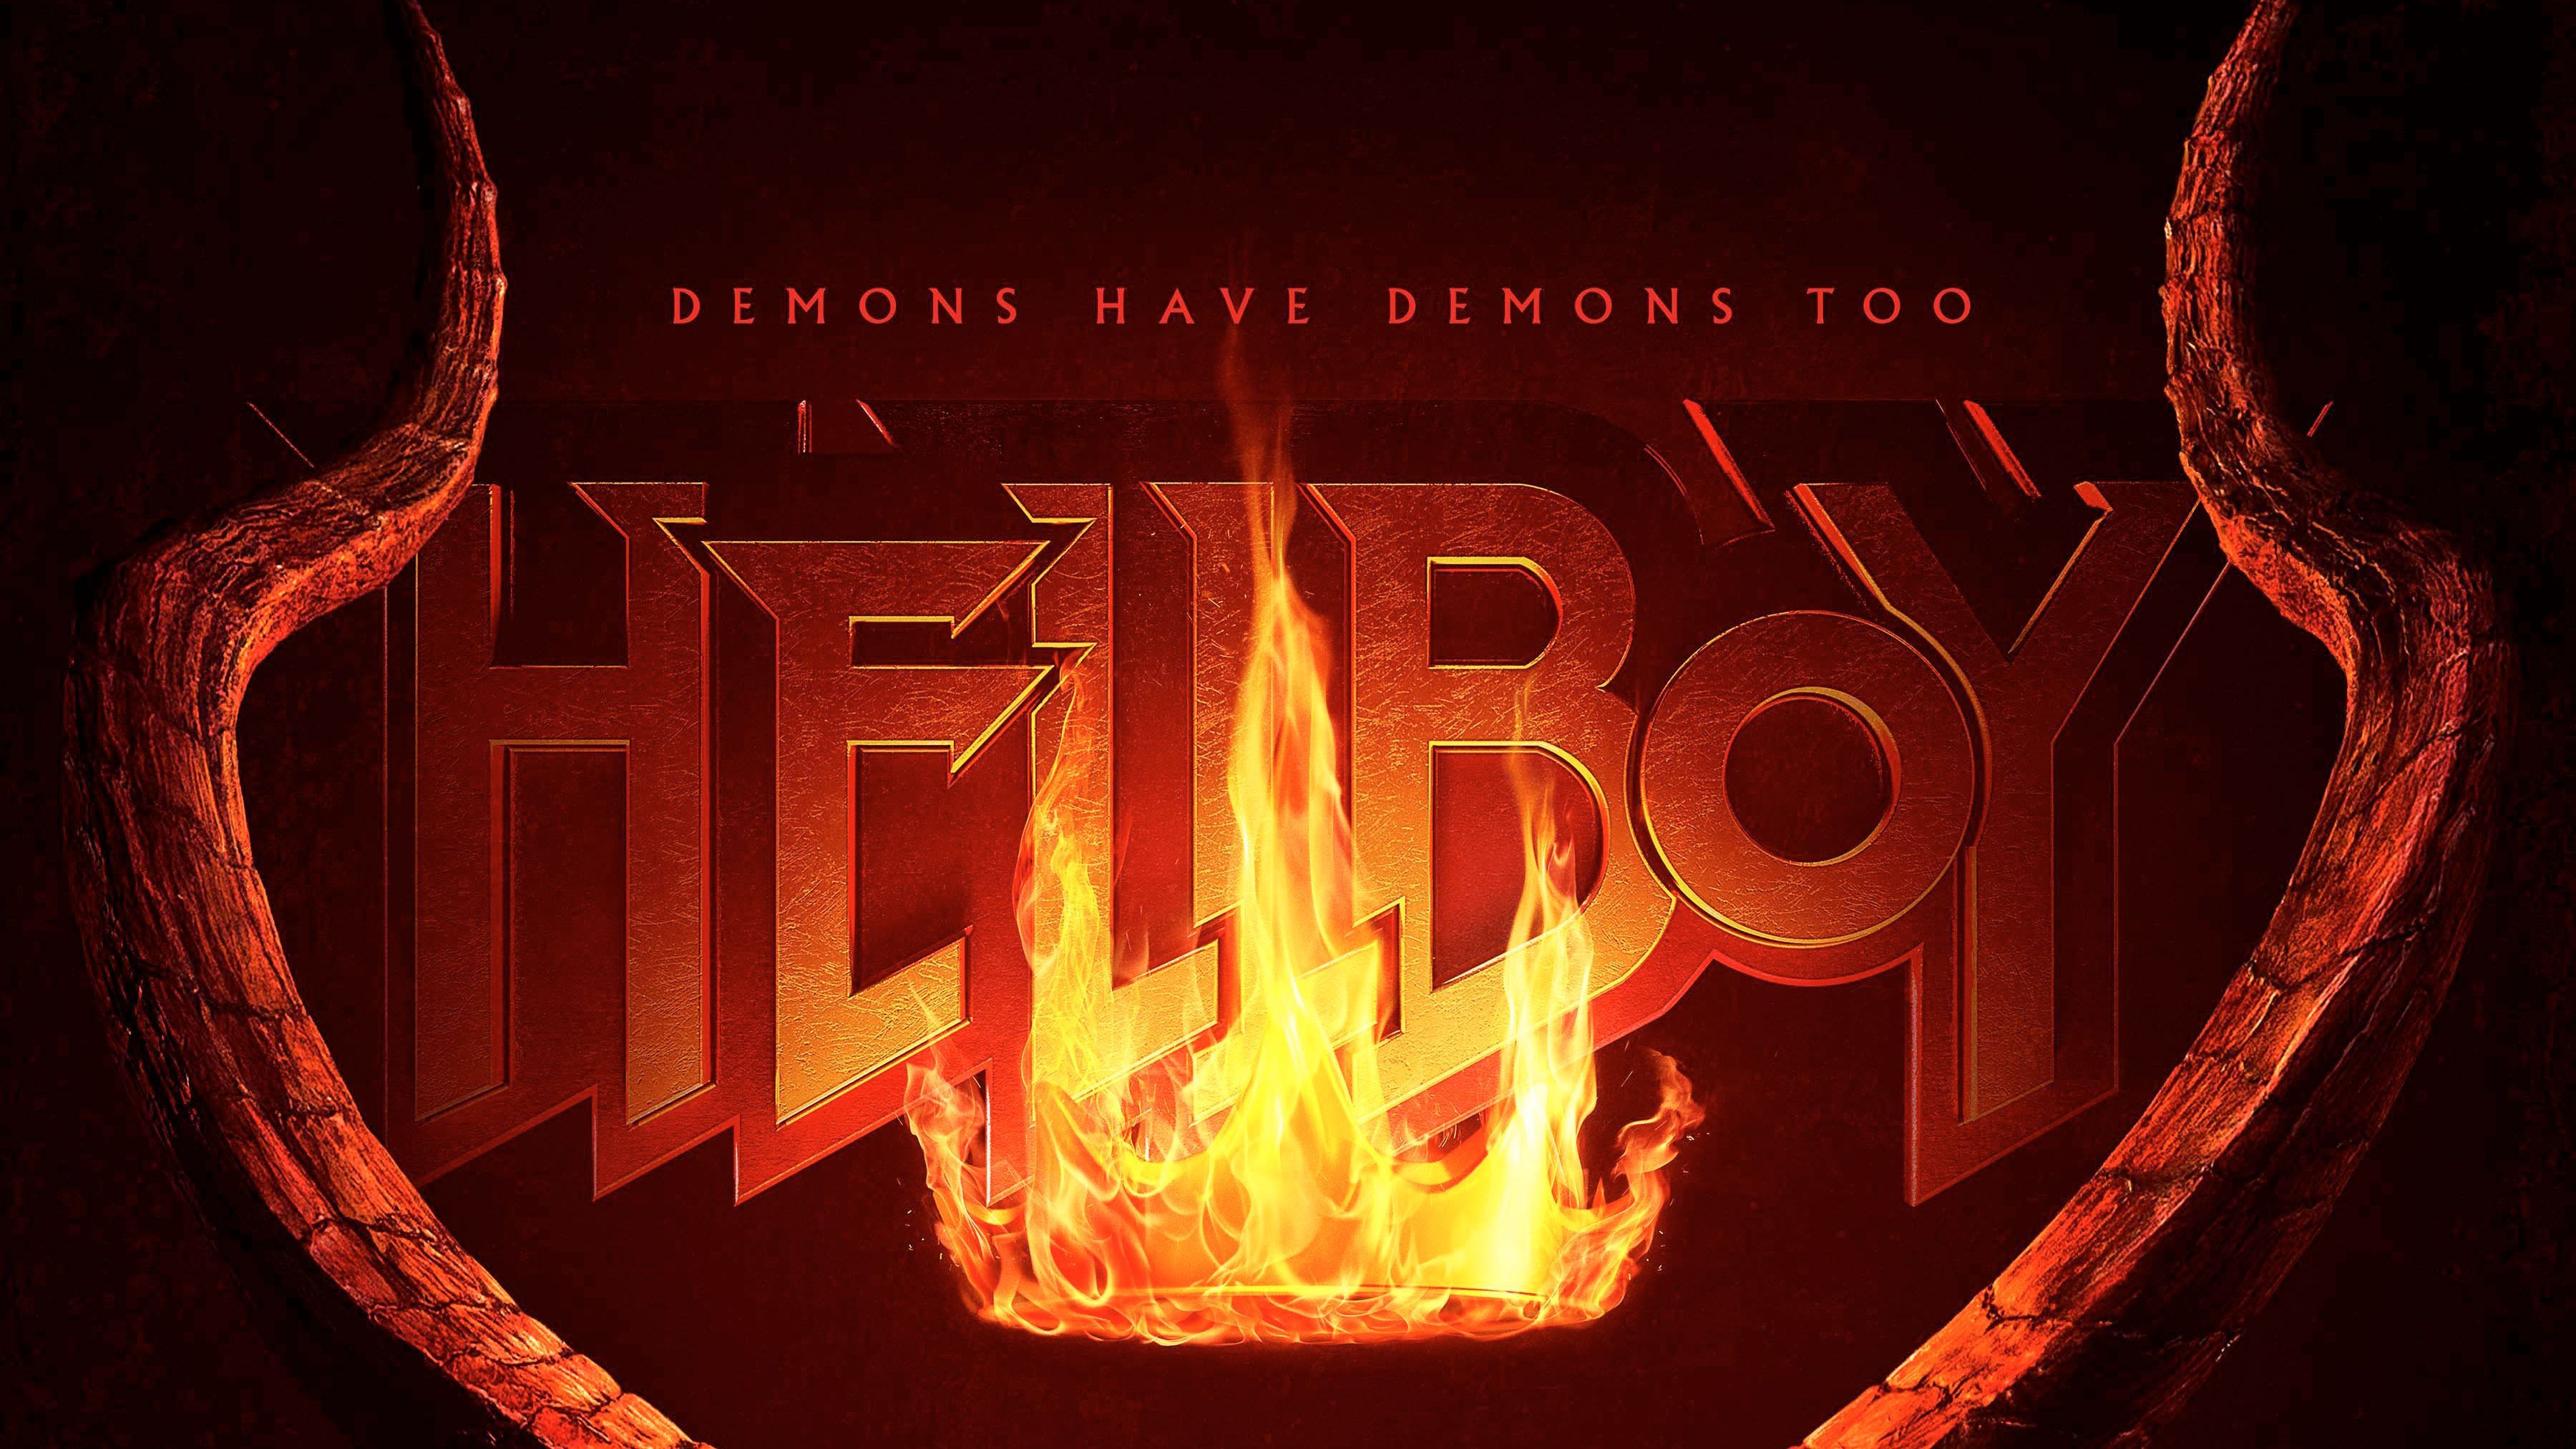 Hellboy 2019 Movie Logo 4k Movies Wallpaper, Logo Wallpaper, Hellboy Wallpaper, Hd Wallpaper, 4. Hellboy Wallpaper, Movie Wallpaper, IPhone Wallpaper Vintage